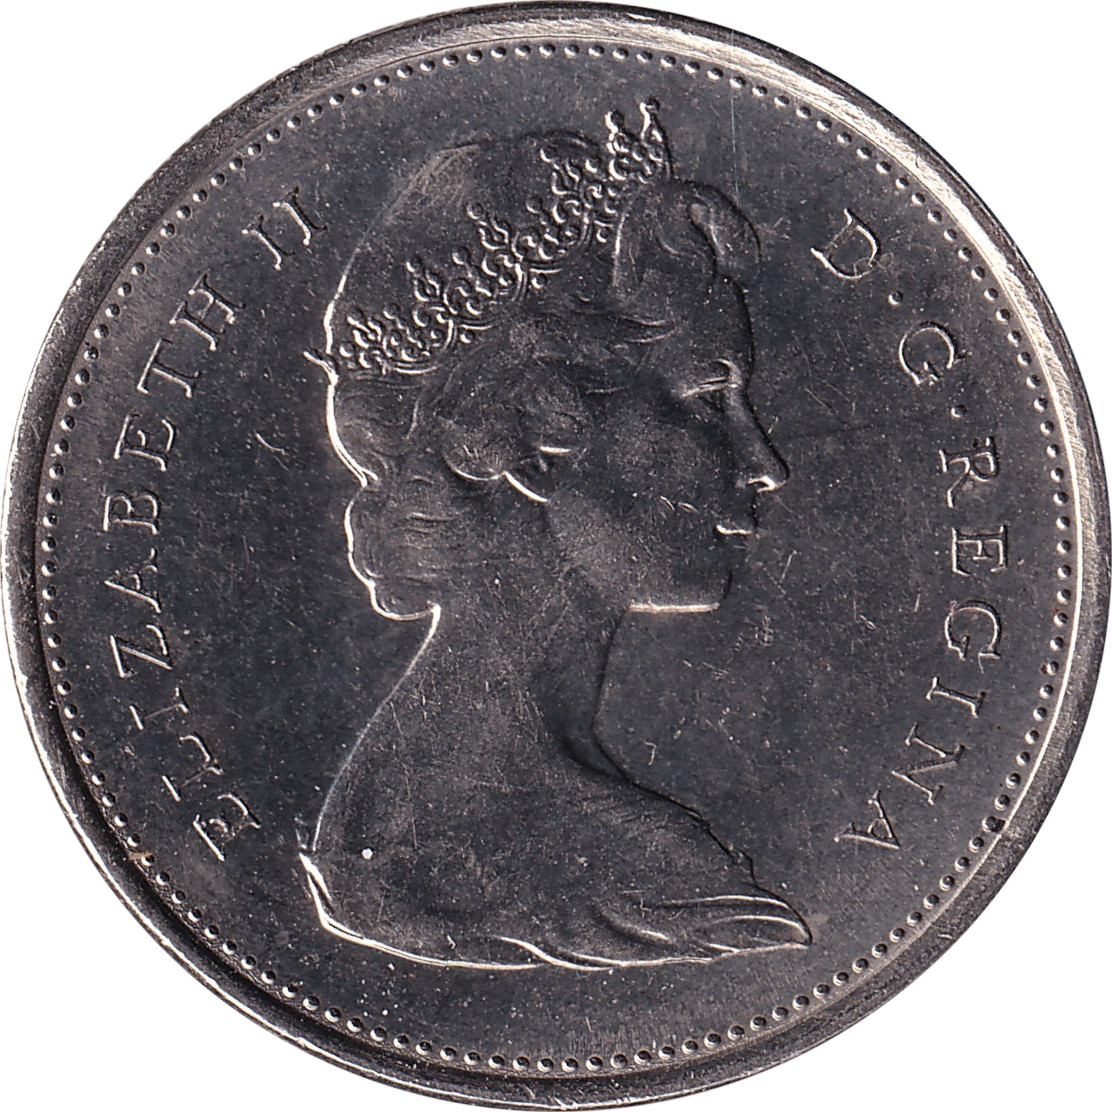 25 cents - Elizabeth II - Buste mature